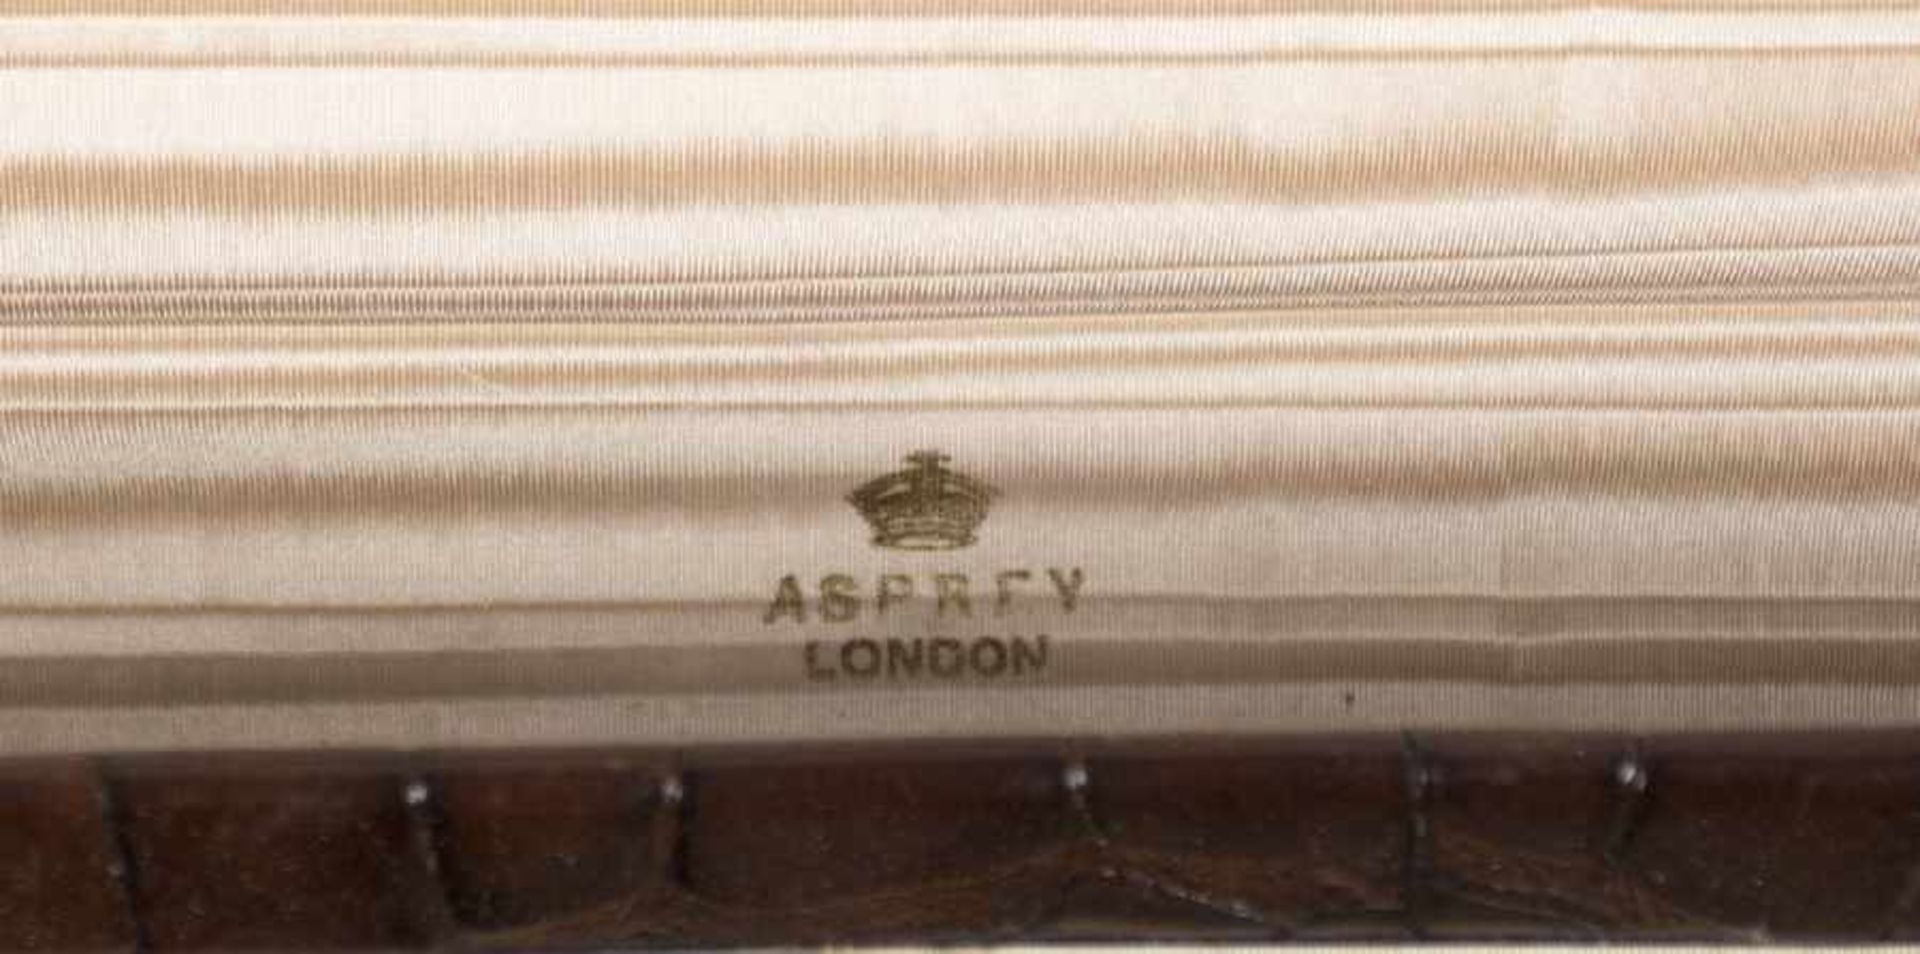 Asprey London Lederkoffer Leder, Messingbeschläge; B 67 cm, T 44 cm, H 20 cm; innen gemarkt " - Bild 3 aus 5